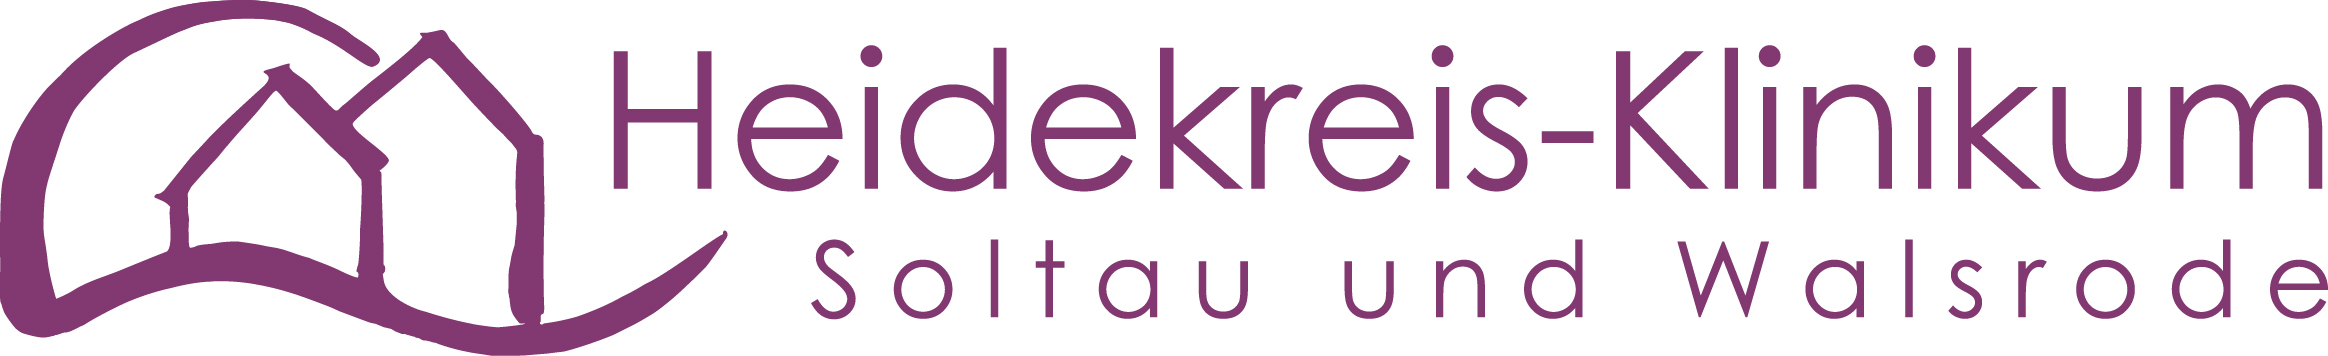 Heidekreis-Klinikum Logo